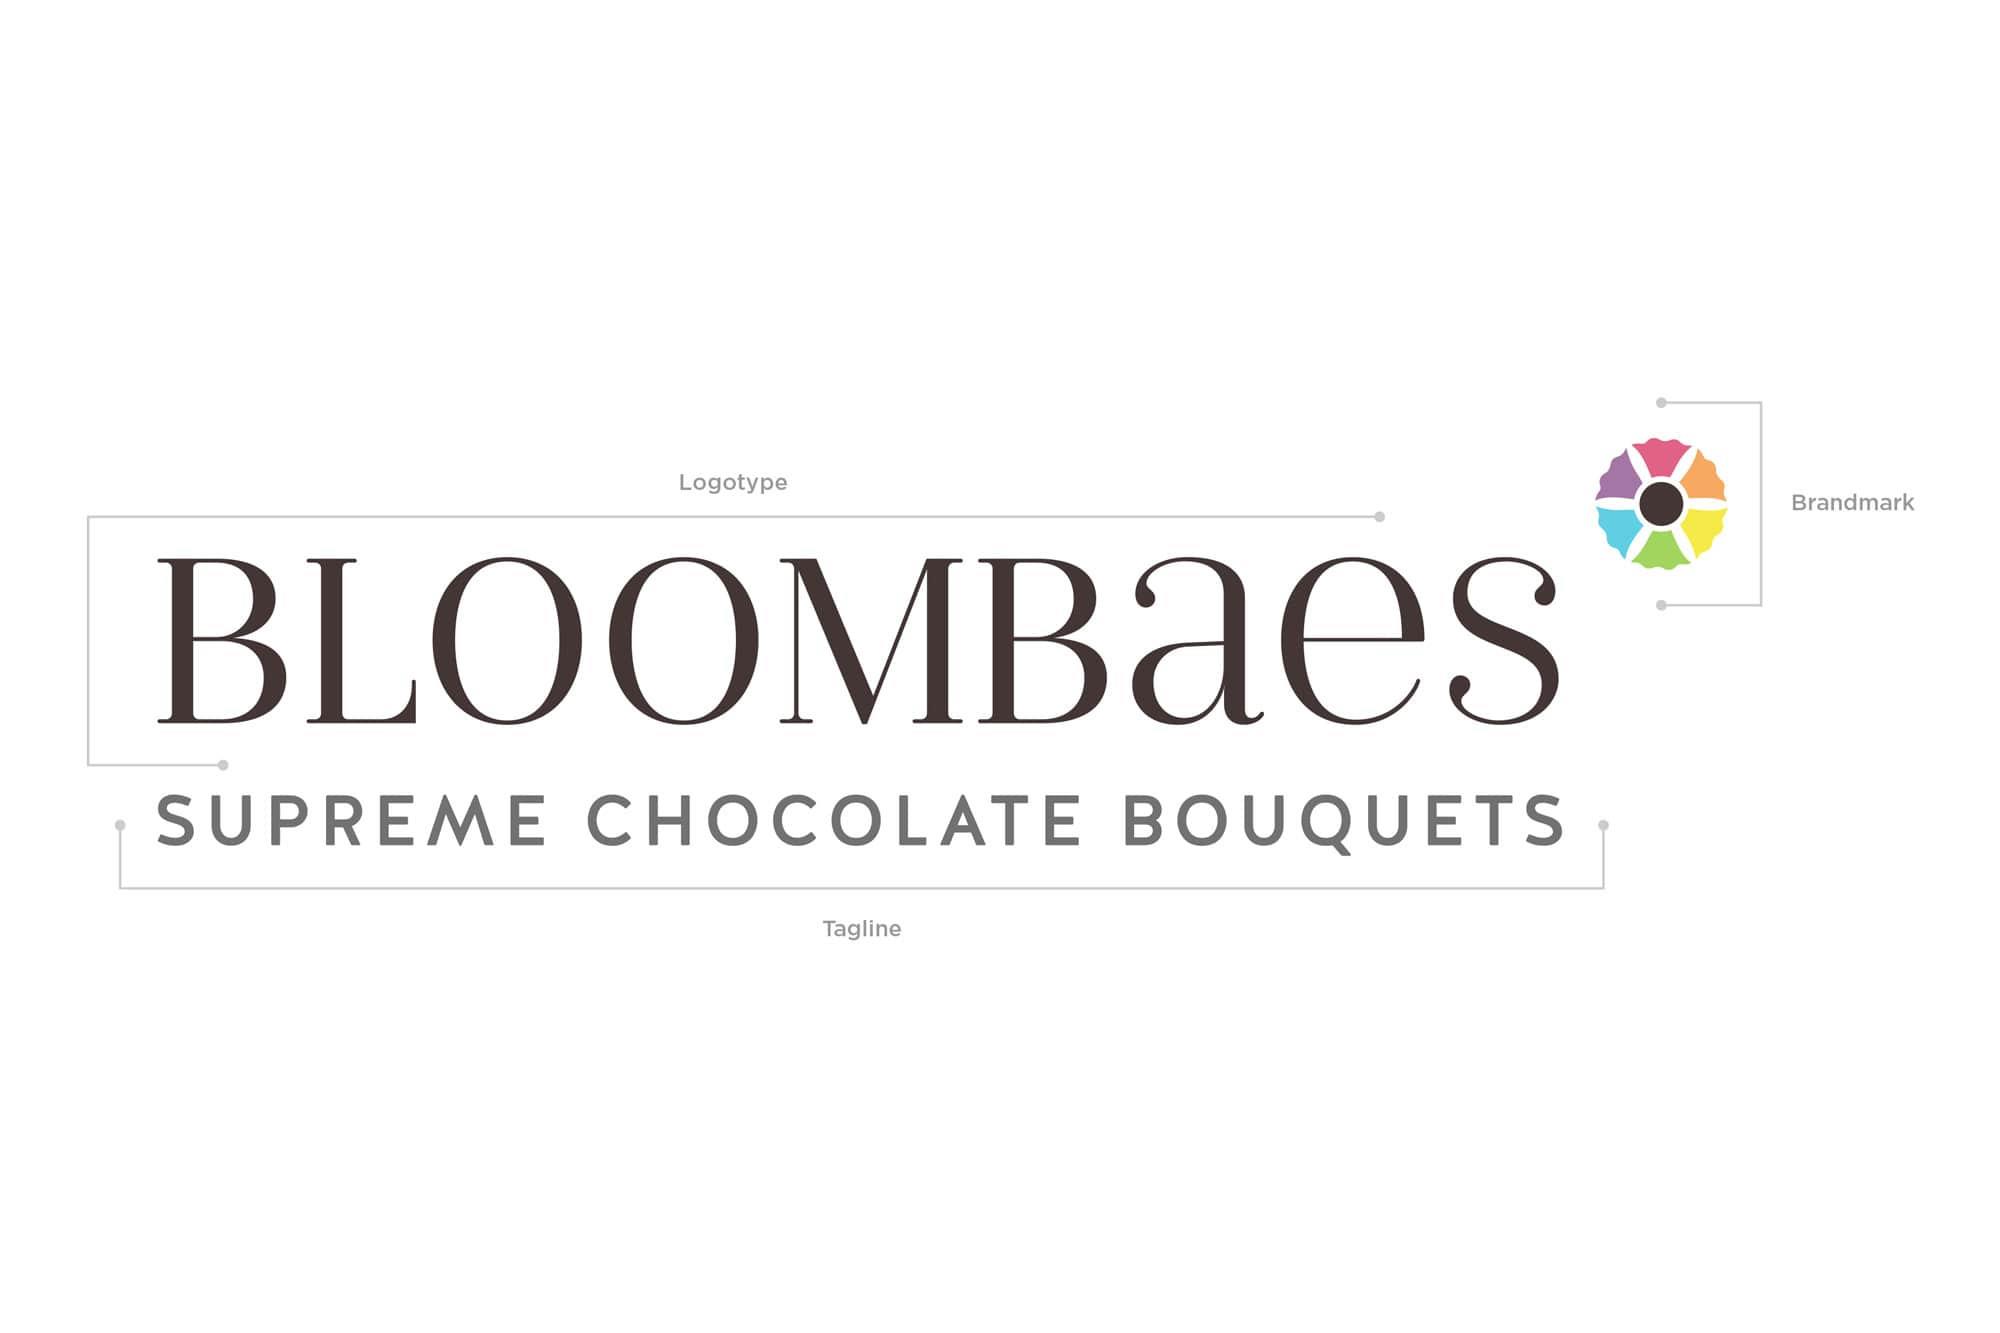 Bloombaes logo breakdown